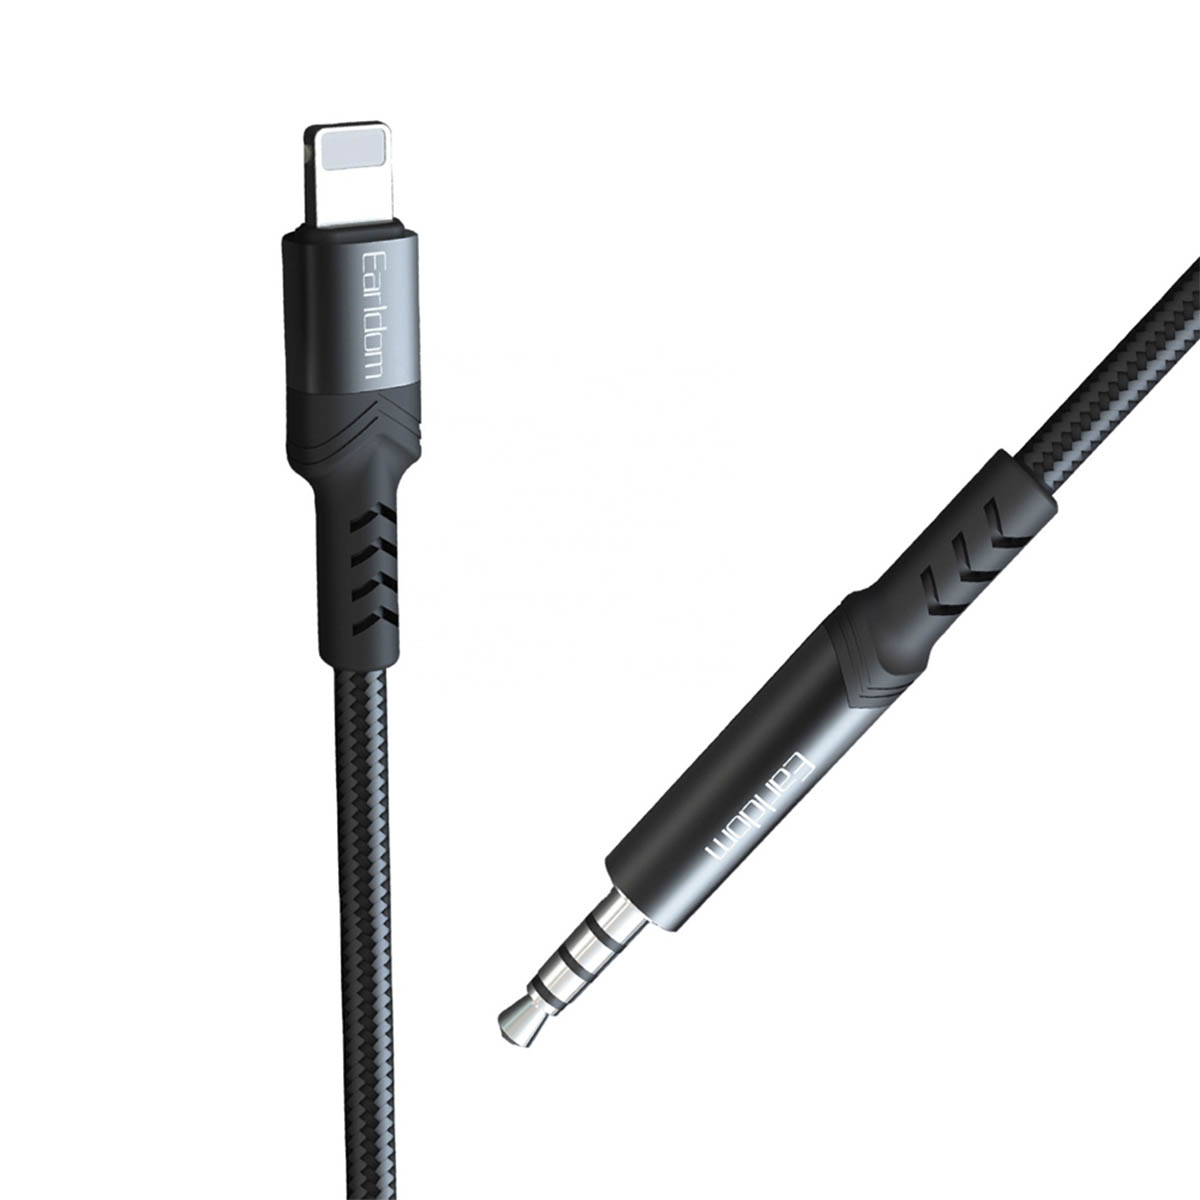 Аудио кабель, переходник EARLDOM AUX39, Jack 3.5 мм на Lightning 8 pin, длина 1 метр, цвет черно серебристый